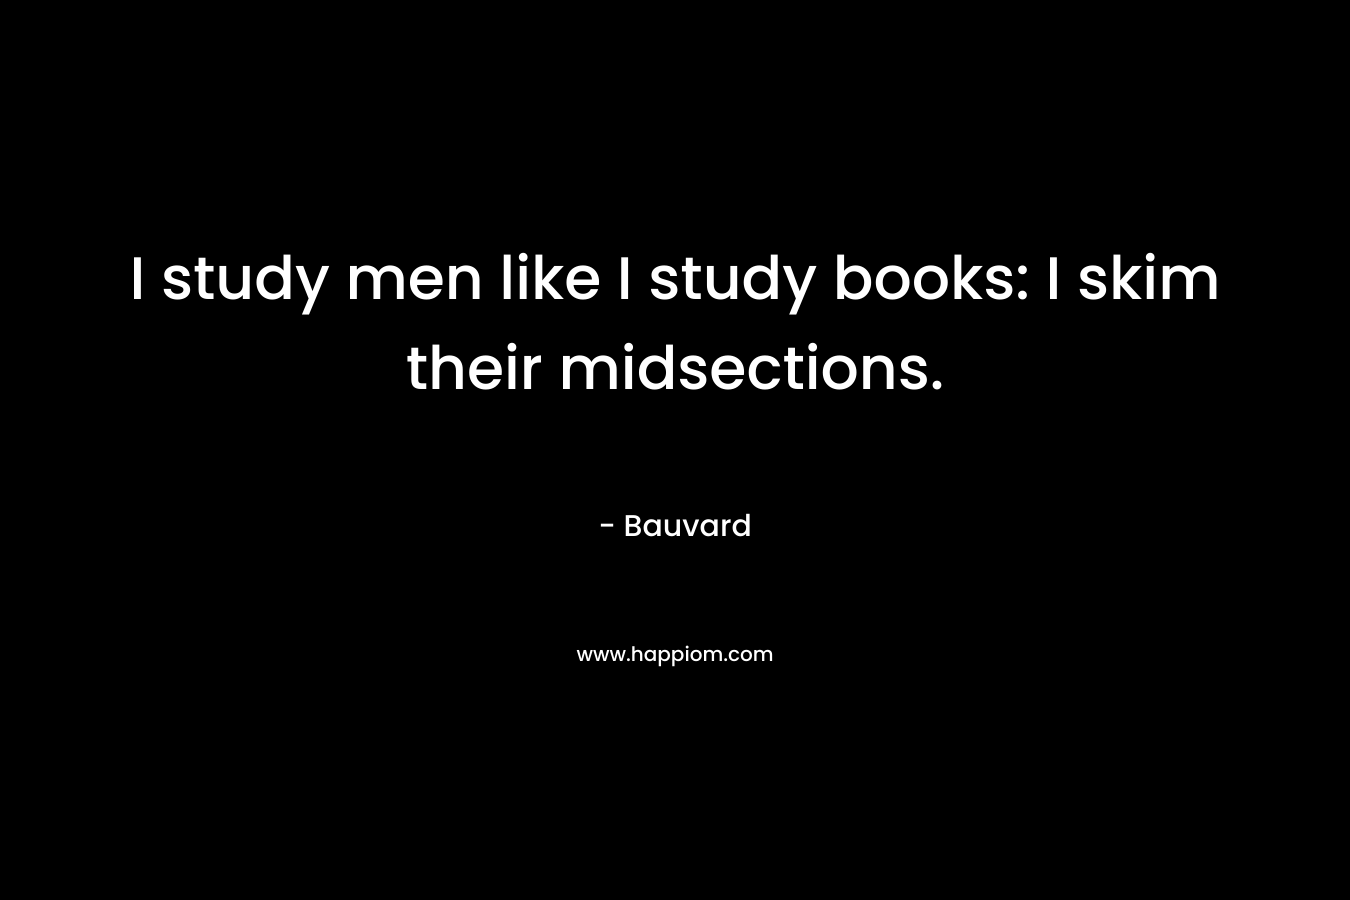 I study men like I study books: I skim their midsections.